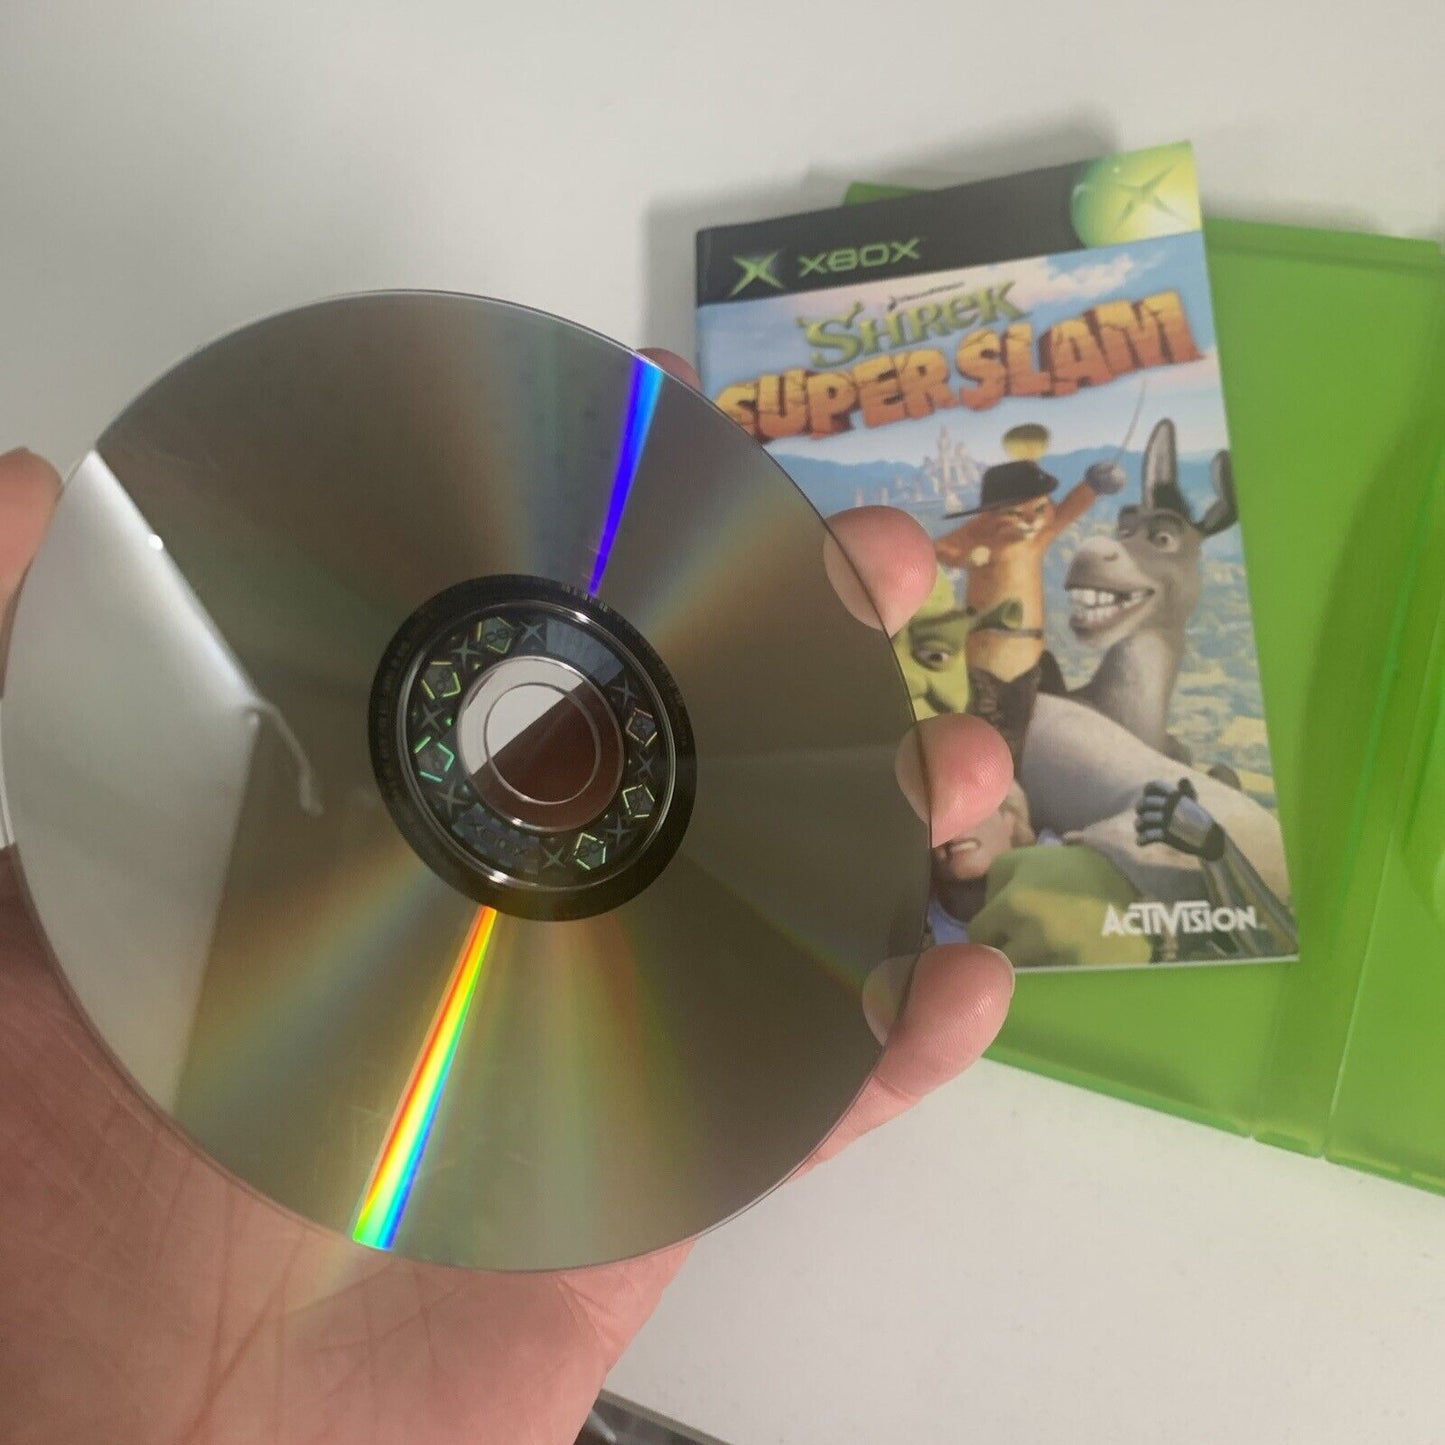 Shrek Super Slam Xbox Original Game